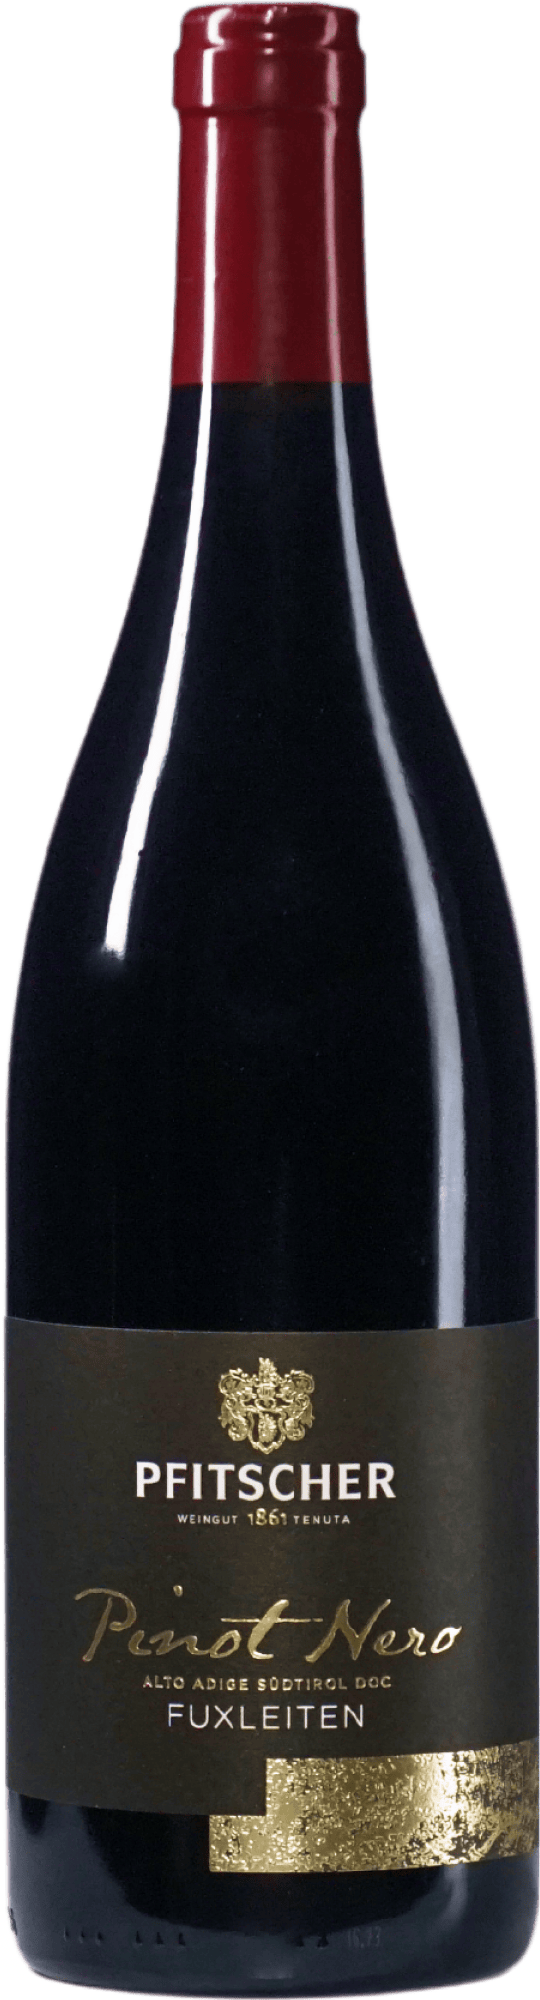 Pinot Nero Fuxleiten